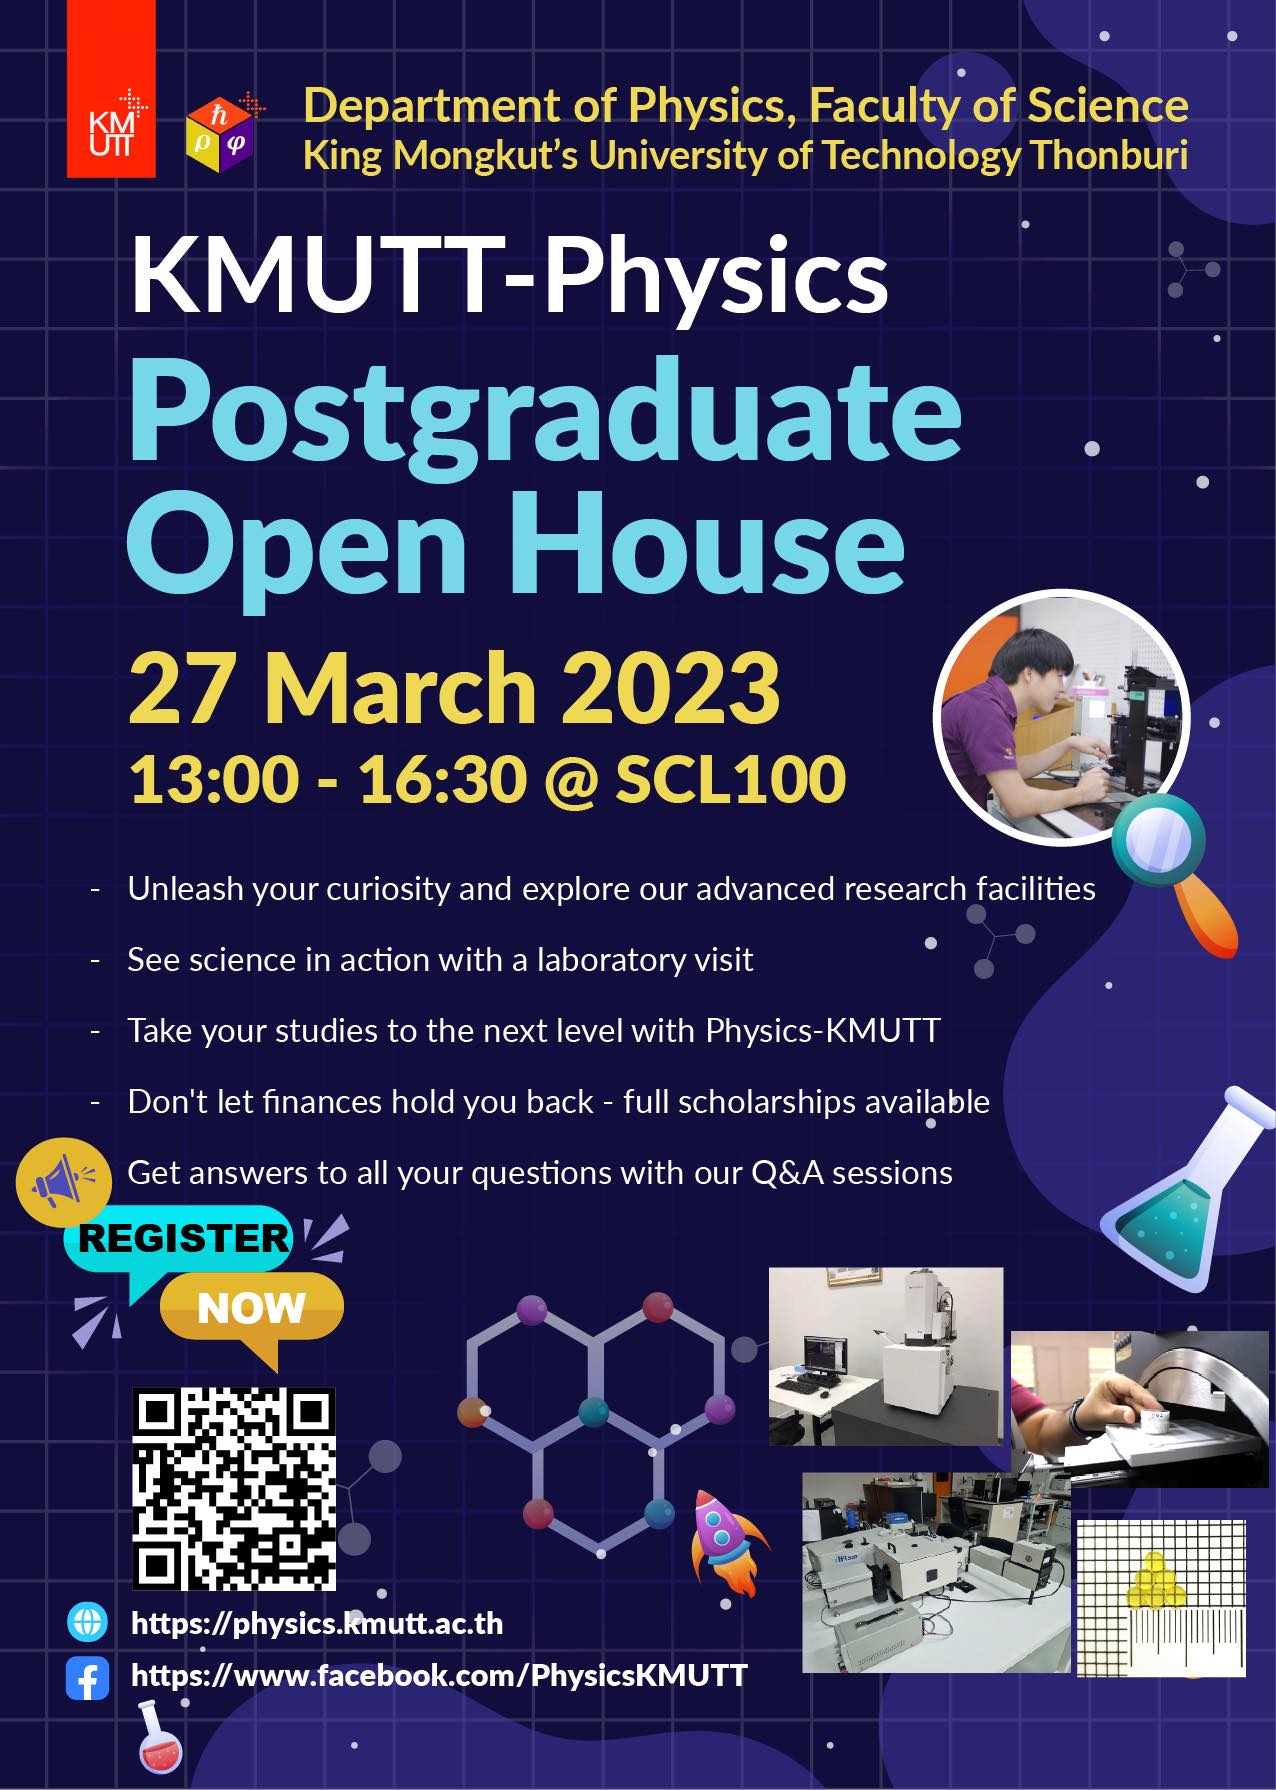 KMUTT-Physics Postgraduate Open House ในวันจันทร์ที่ 27 มีนาคม 2566 เวลา 13:00 - 16:30 น. ณ ห้อง SCL100 